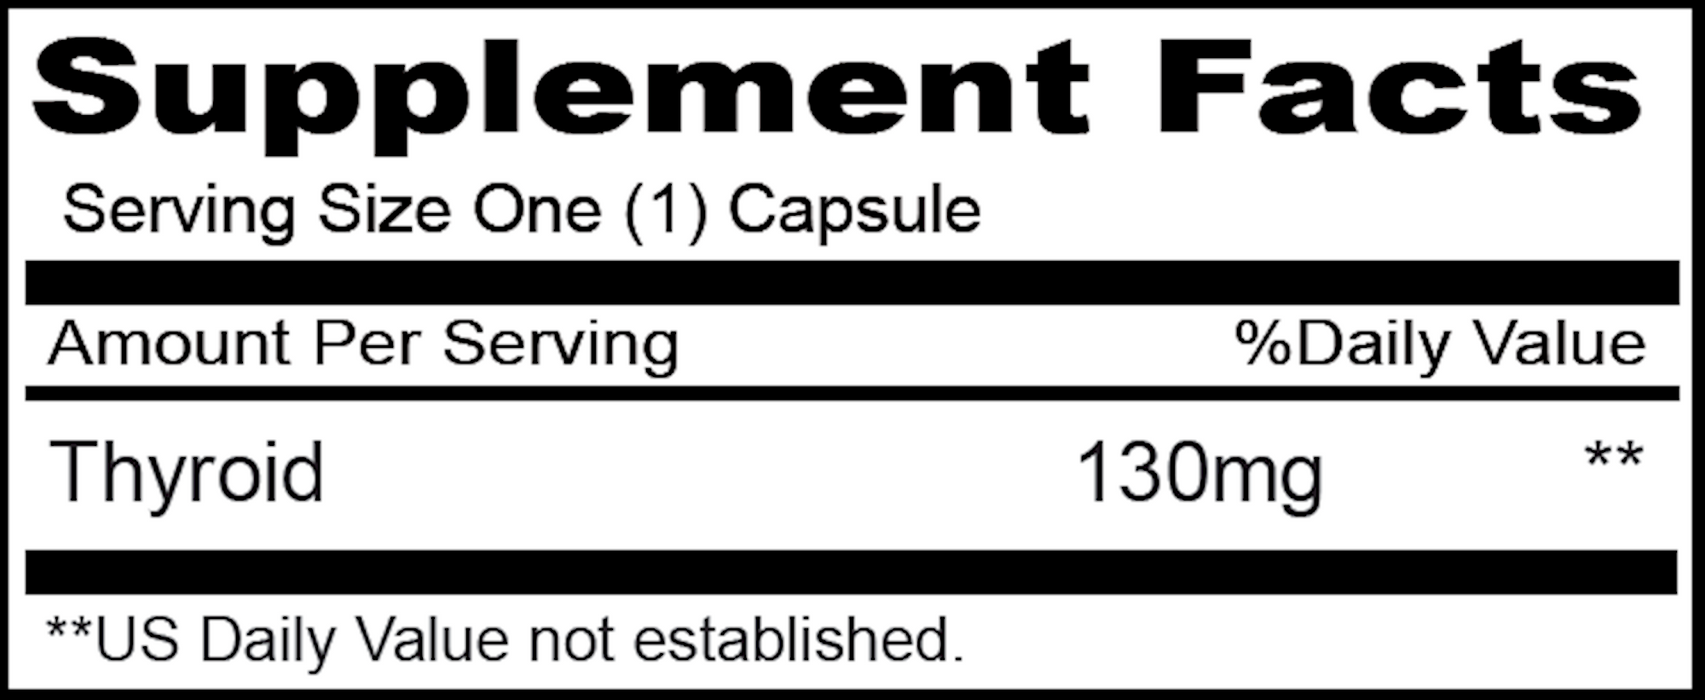 Priority One Vitamins Thyroid 130 mg 90 caps